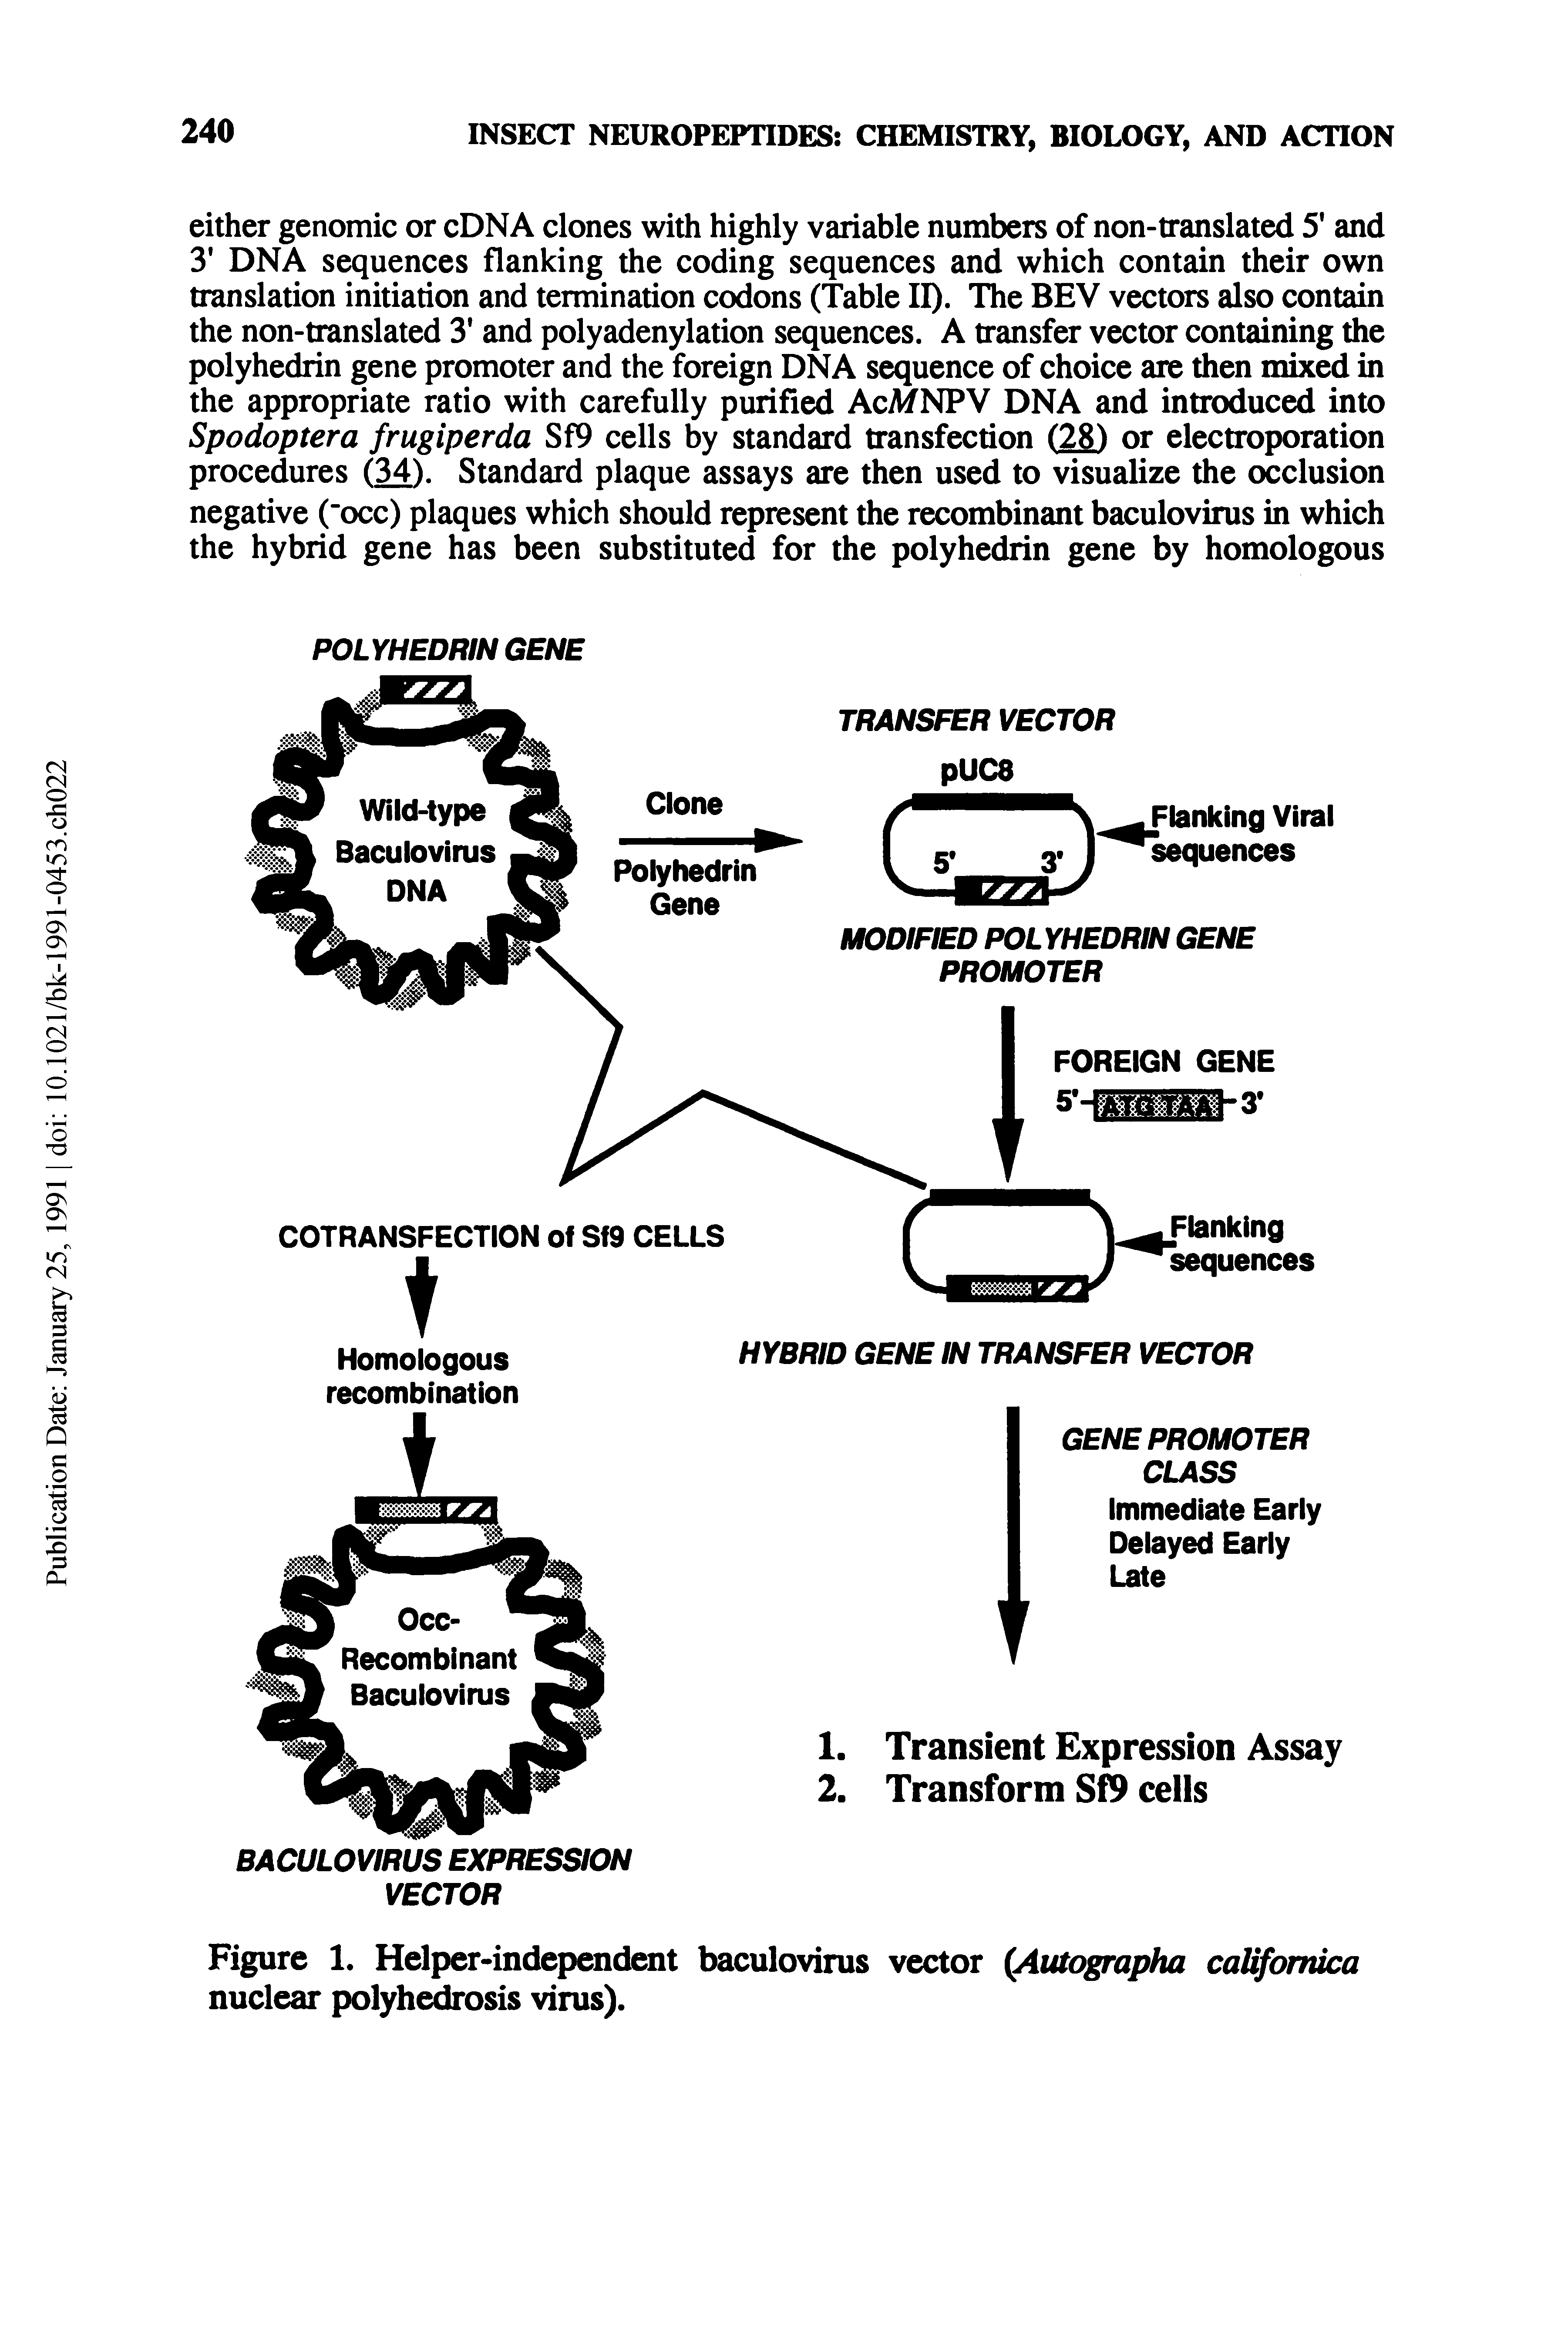 Figure 1. Helper-independent baculovirus vector (Autographa cattfomica nuclear polyhedrosis virus).